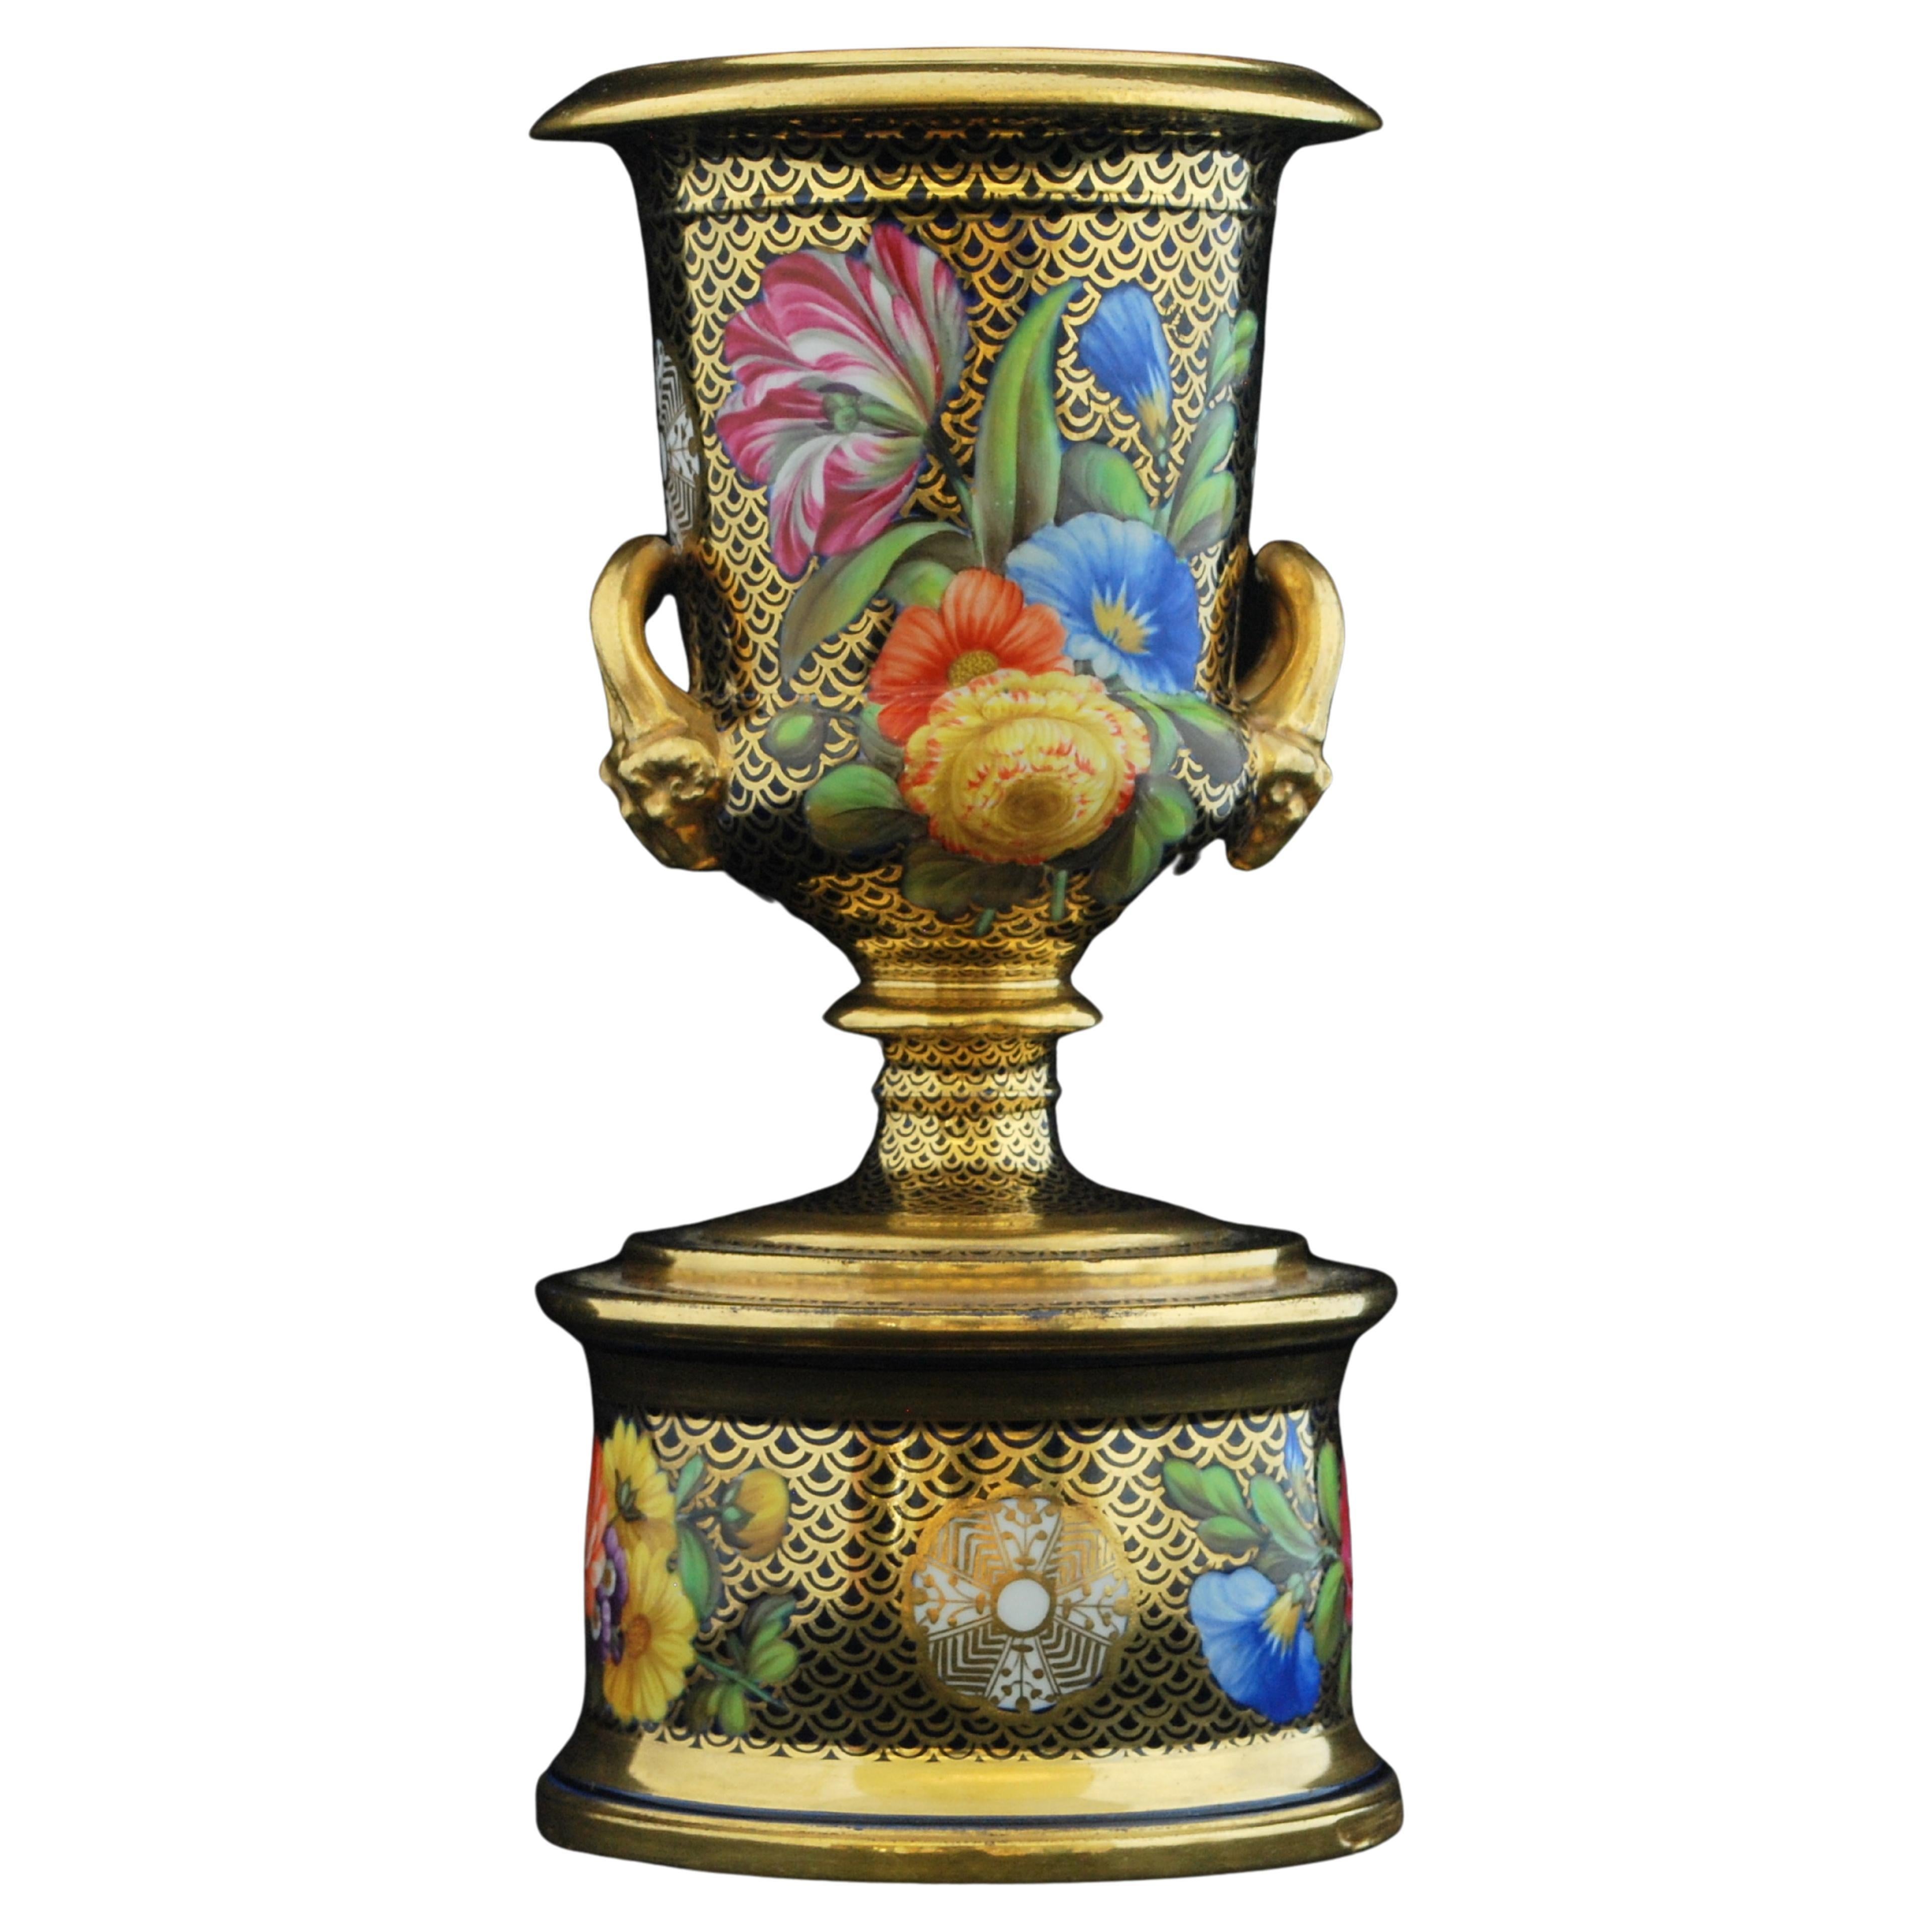 Campana-Vase mit Muster 1166. Spode, um 1820